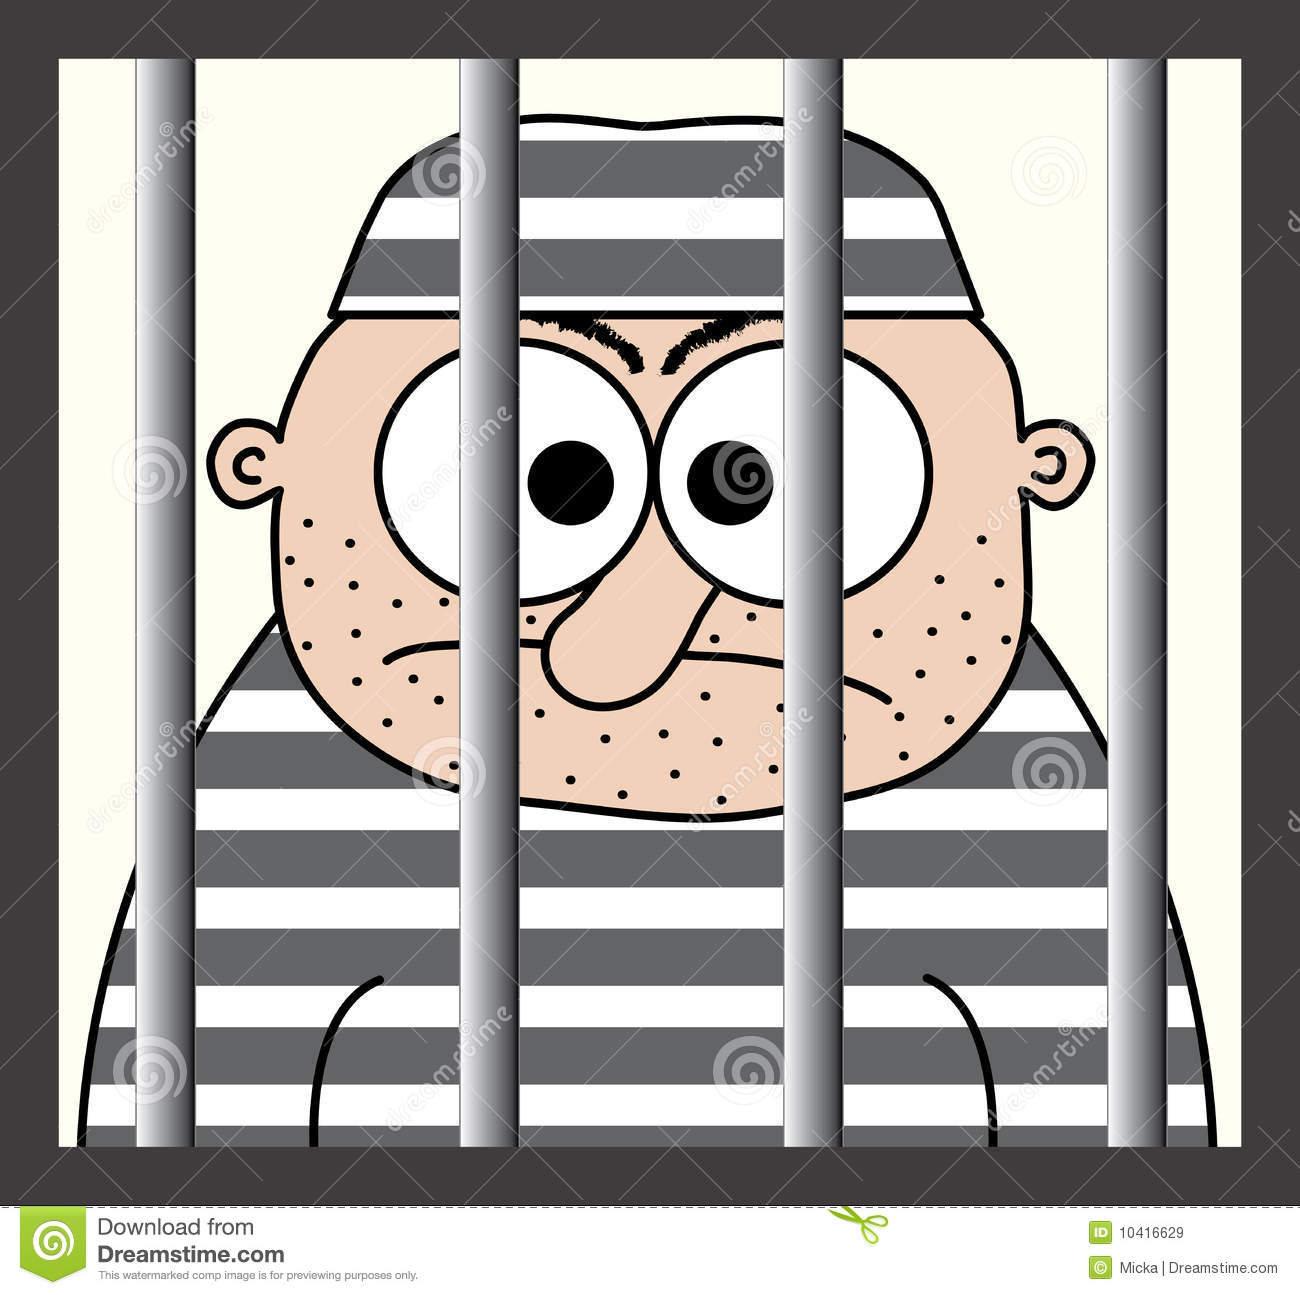 Cartoon Prisoner Behind Bars Royalty Free Stock Images   Image